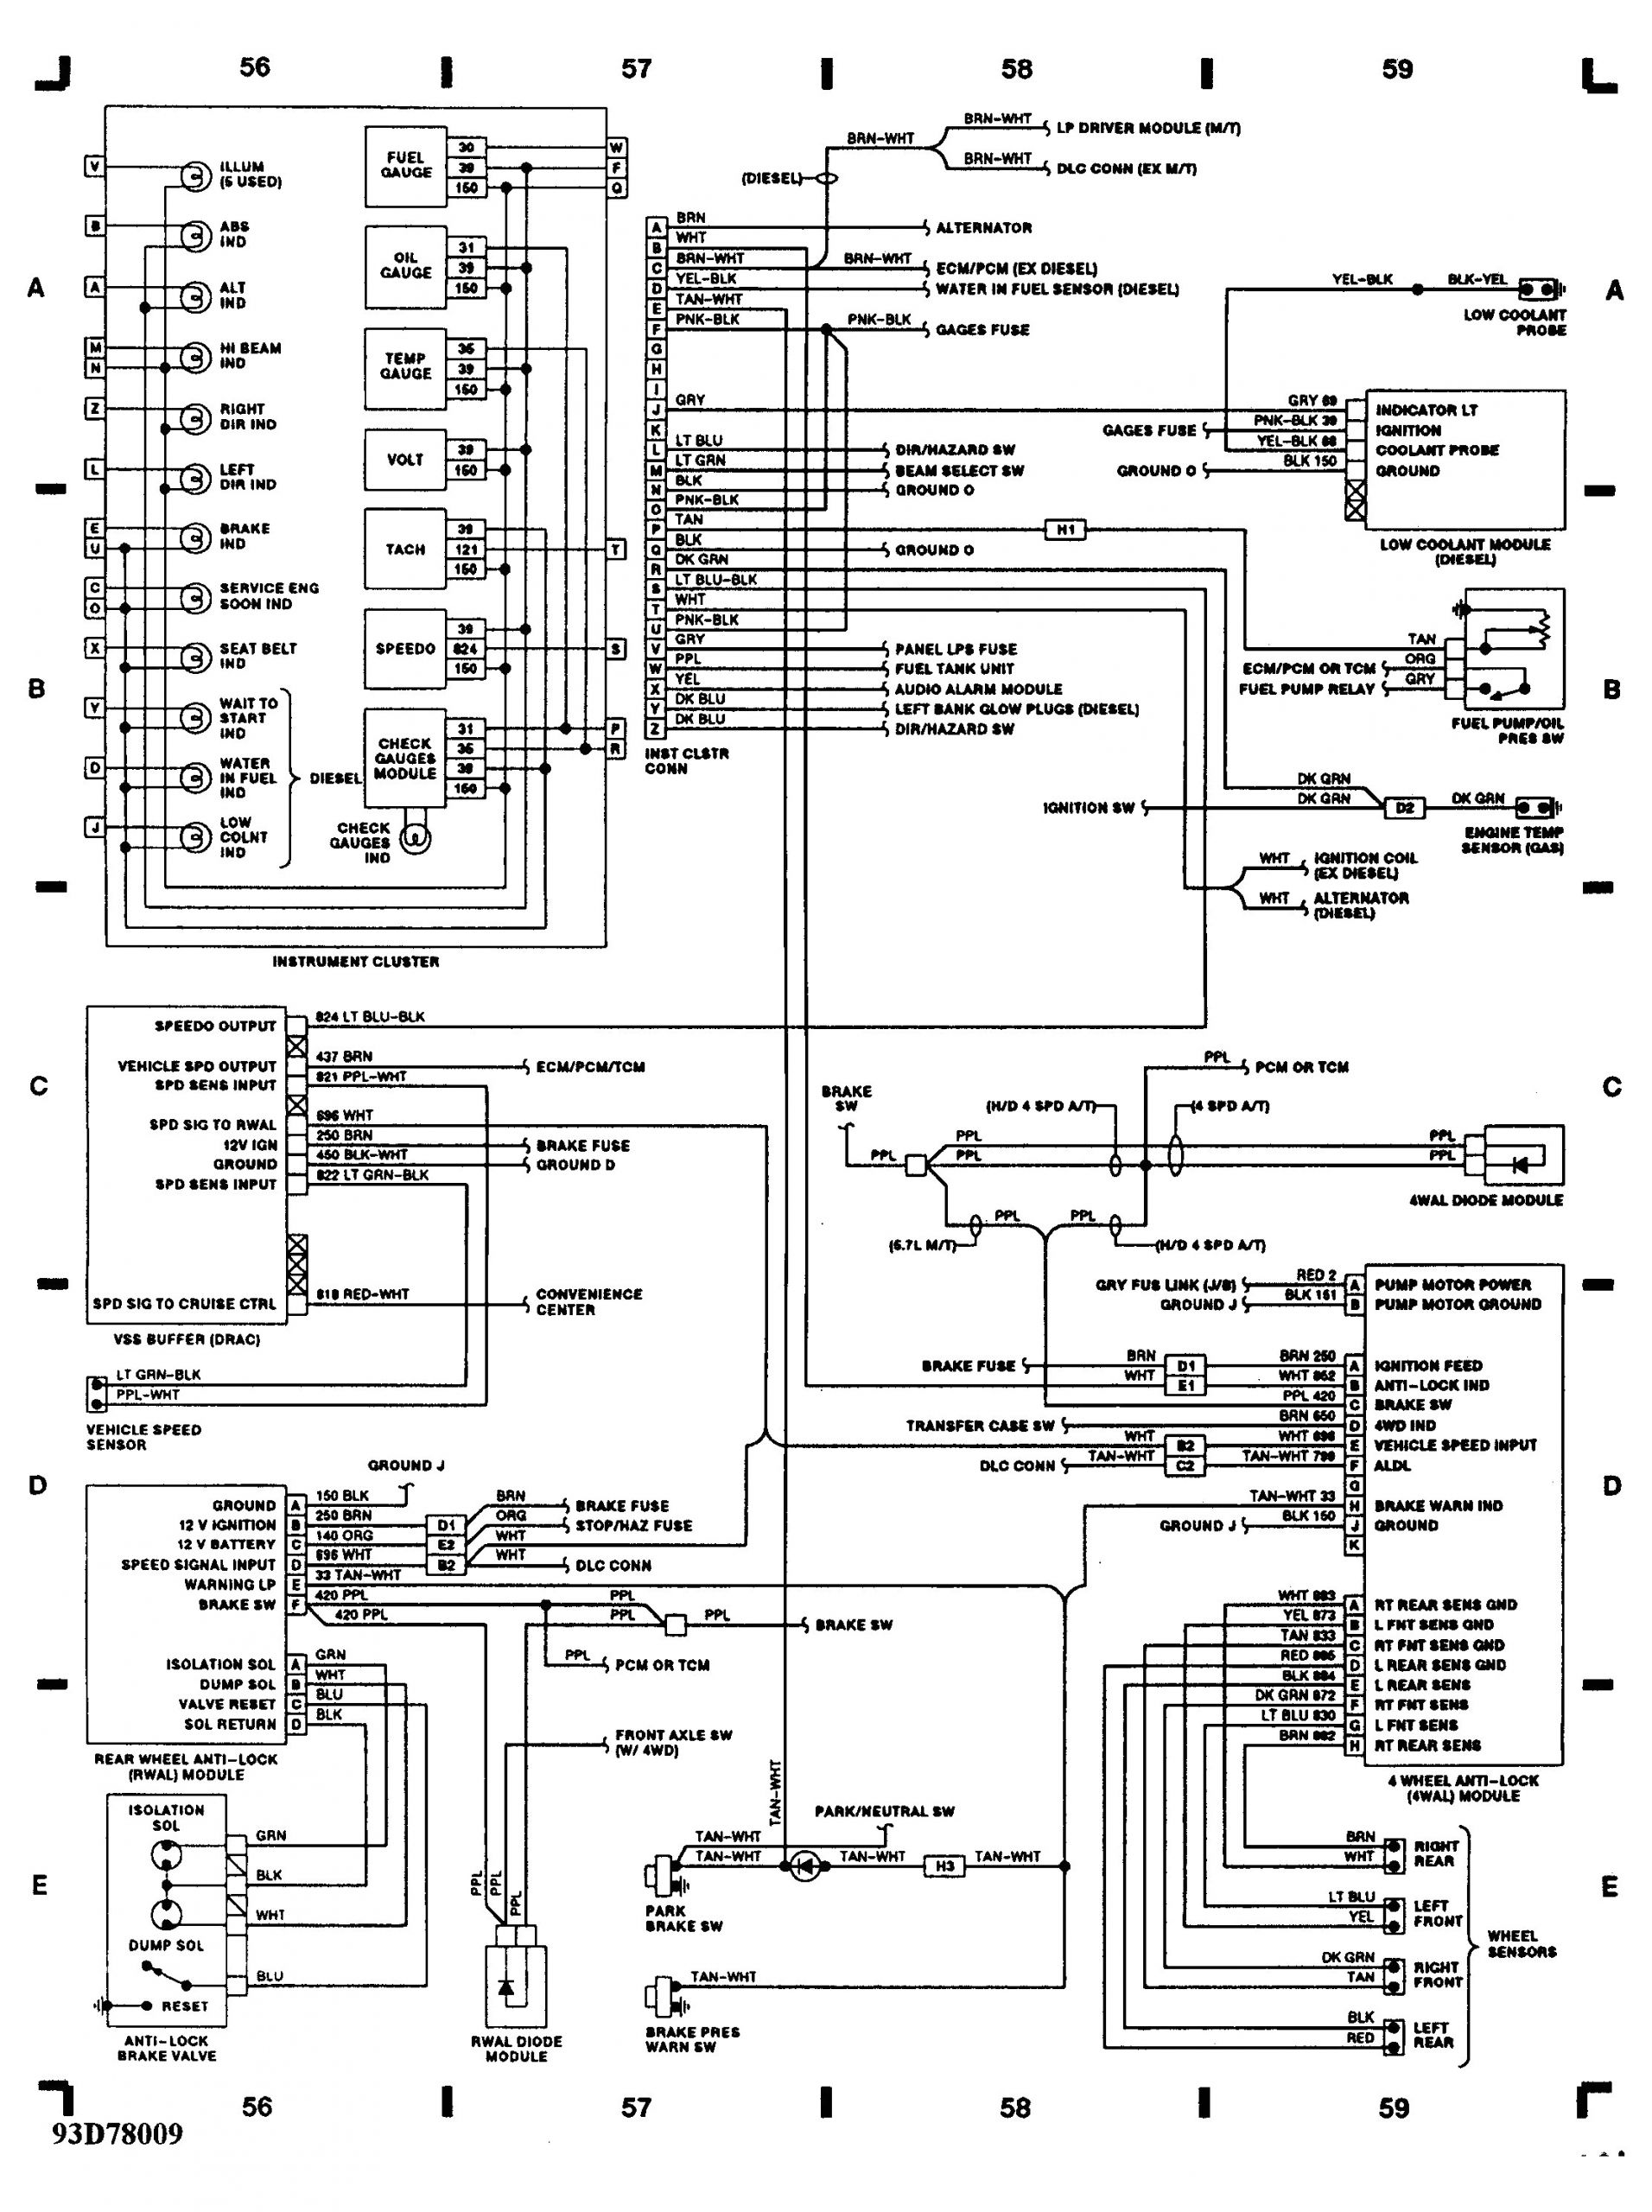 7 3 diesel engine diagram wiring diagram yamaha 125zr save 5 7 vortec wiring harness diagram of 7 3 diesel engine diagram jpg